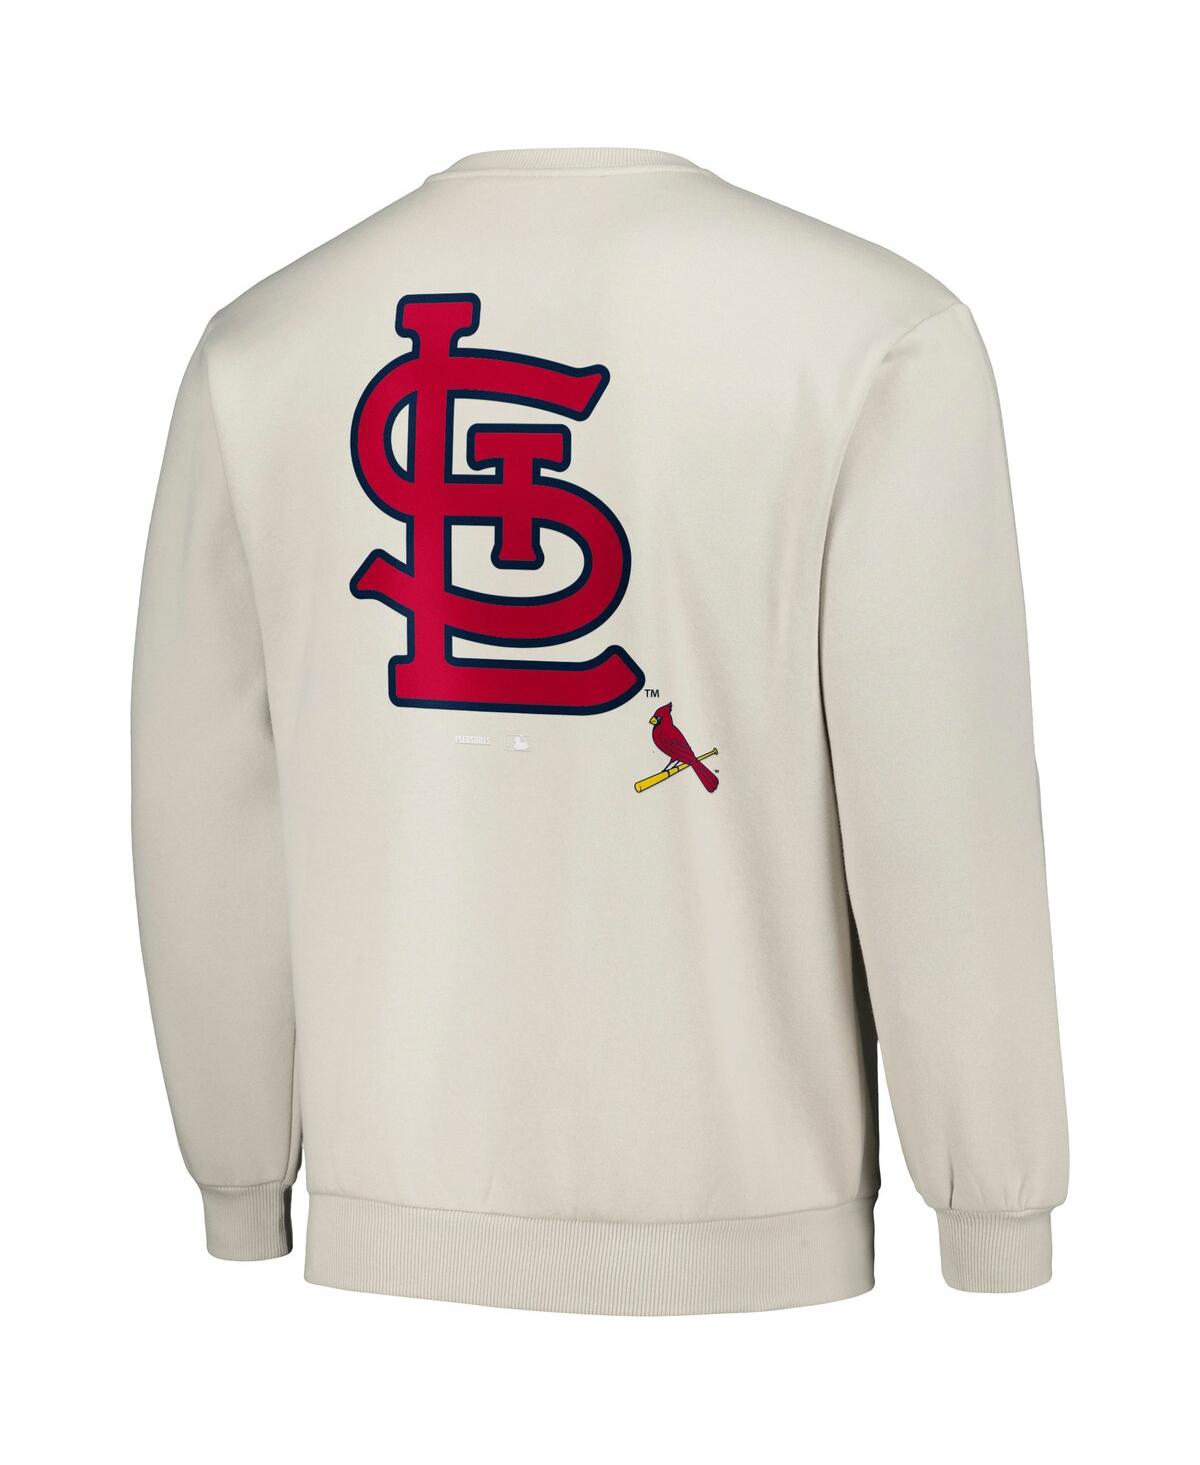 Shop Pleasures Men's  Gray St. Louis Cardinals Ballpark Pullover Sweatshirt